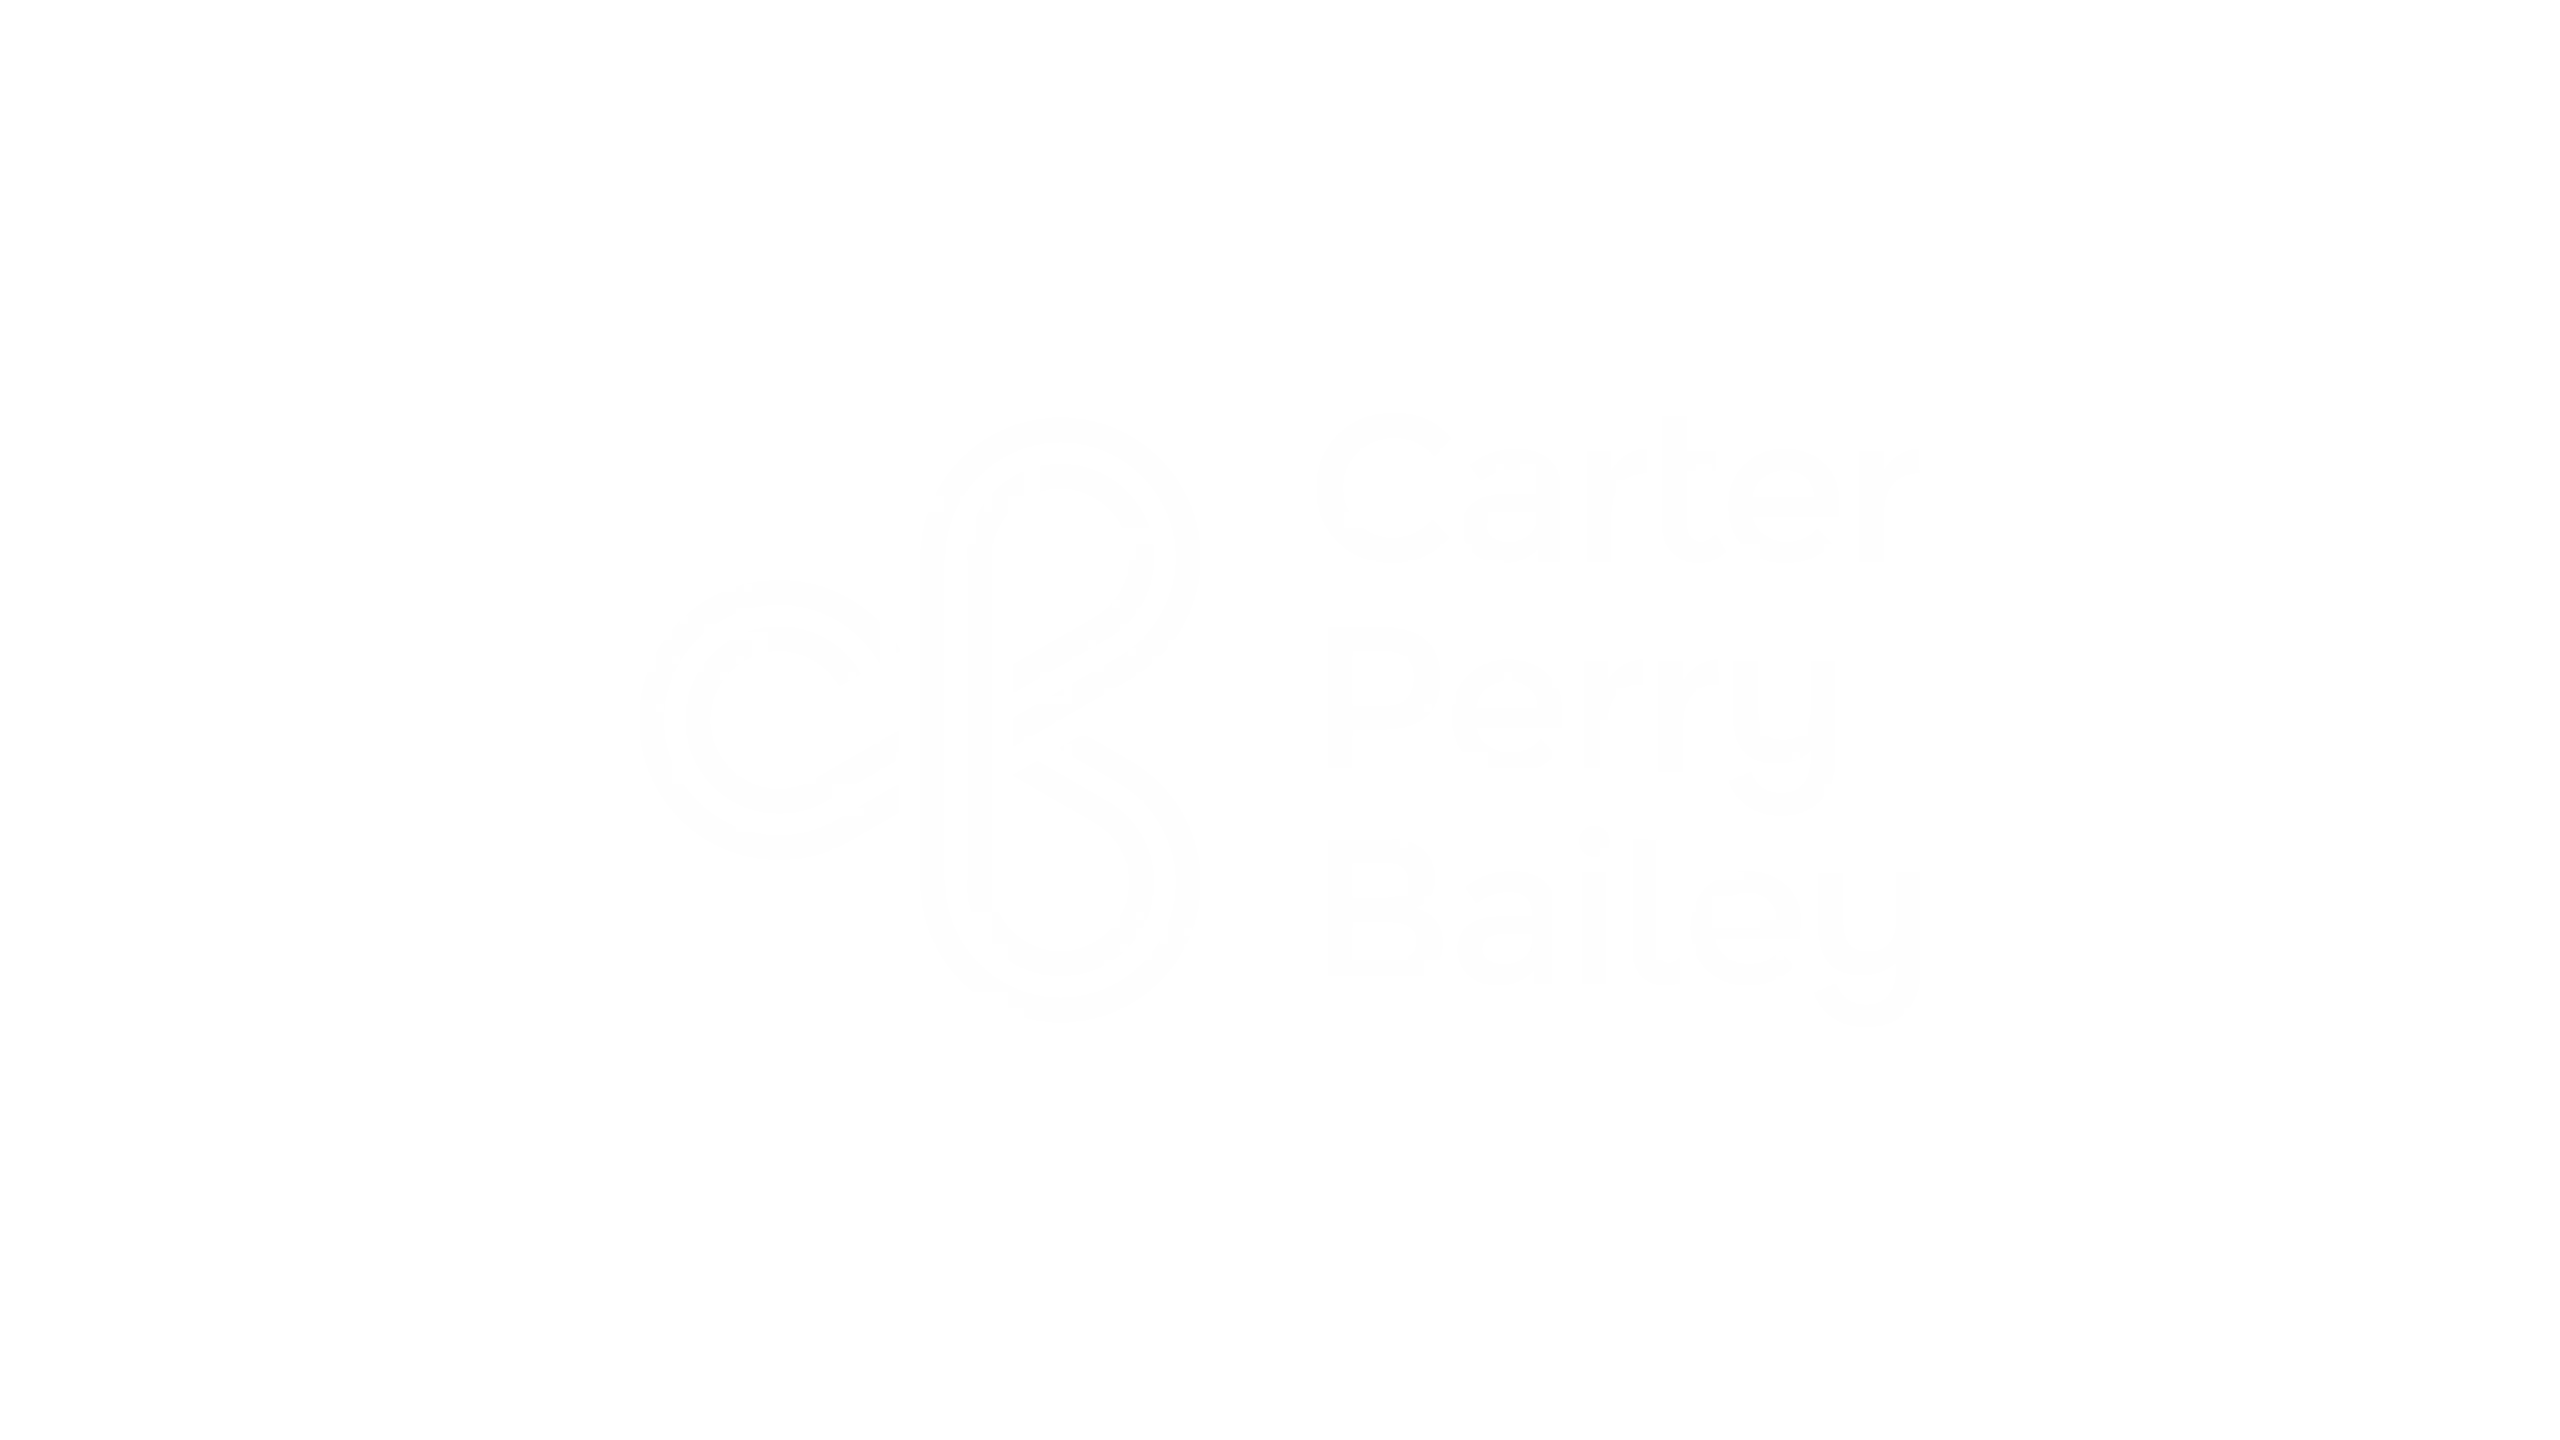 Carter Perry Bailey Branding by Peek Creative